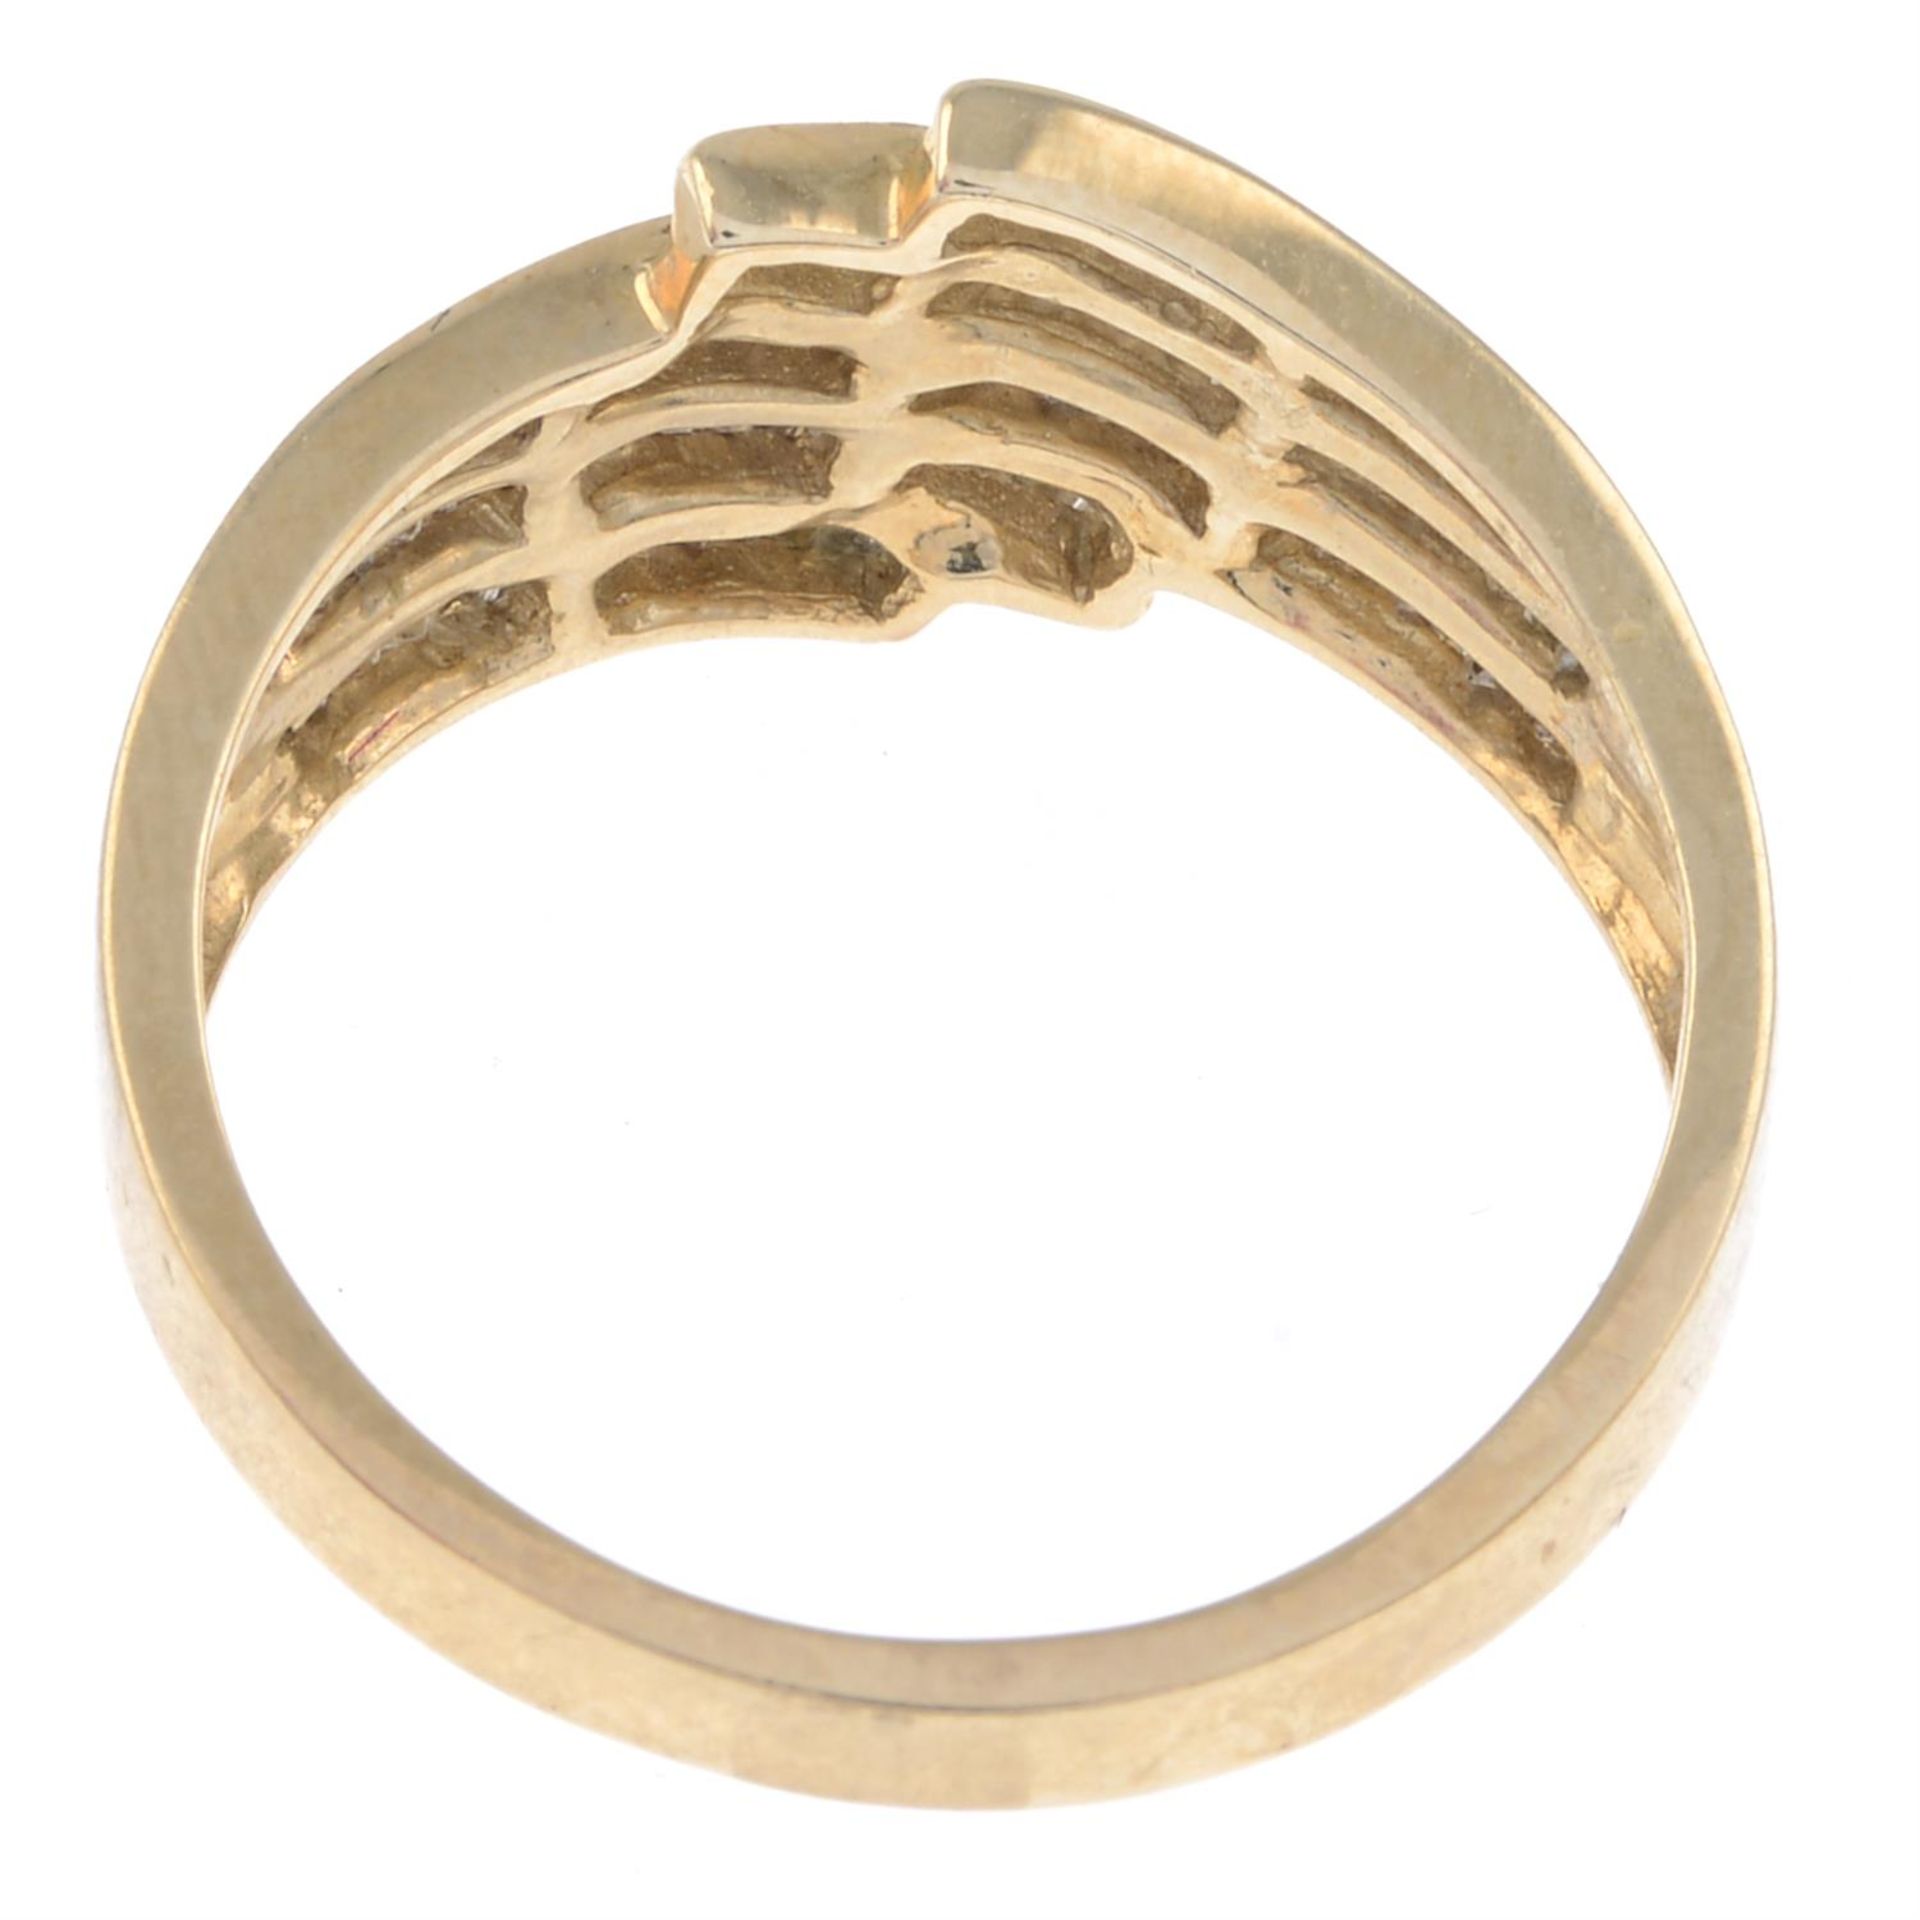 9ct gold pave-set diamond ring - Image 2 of 2